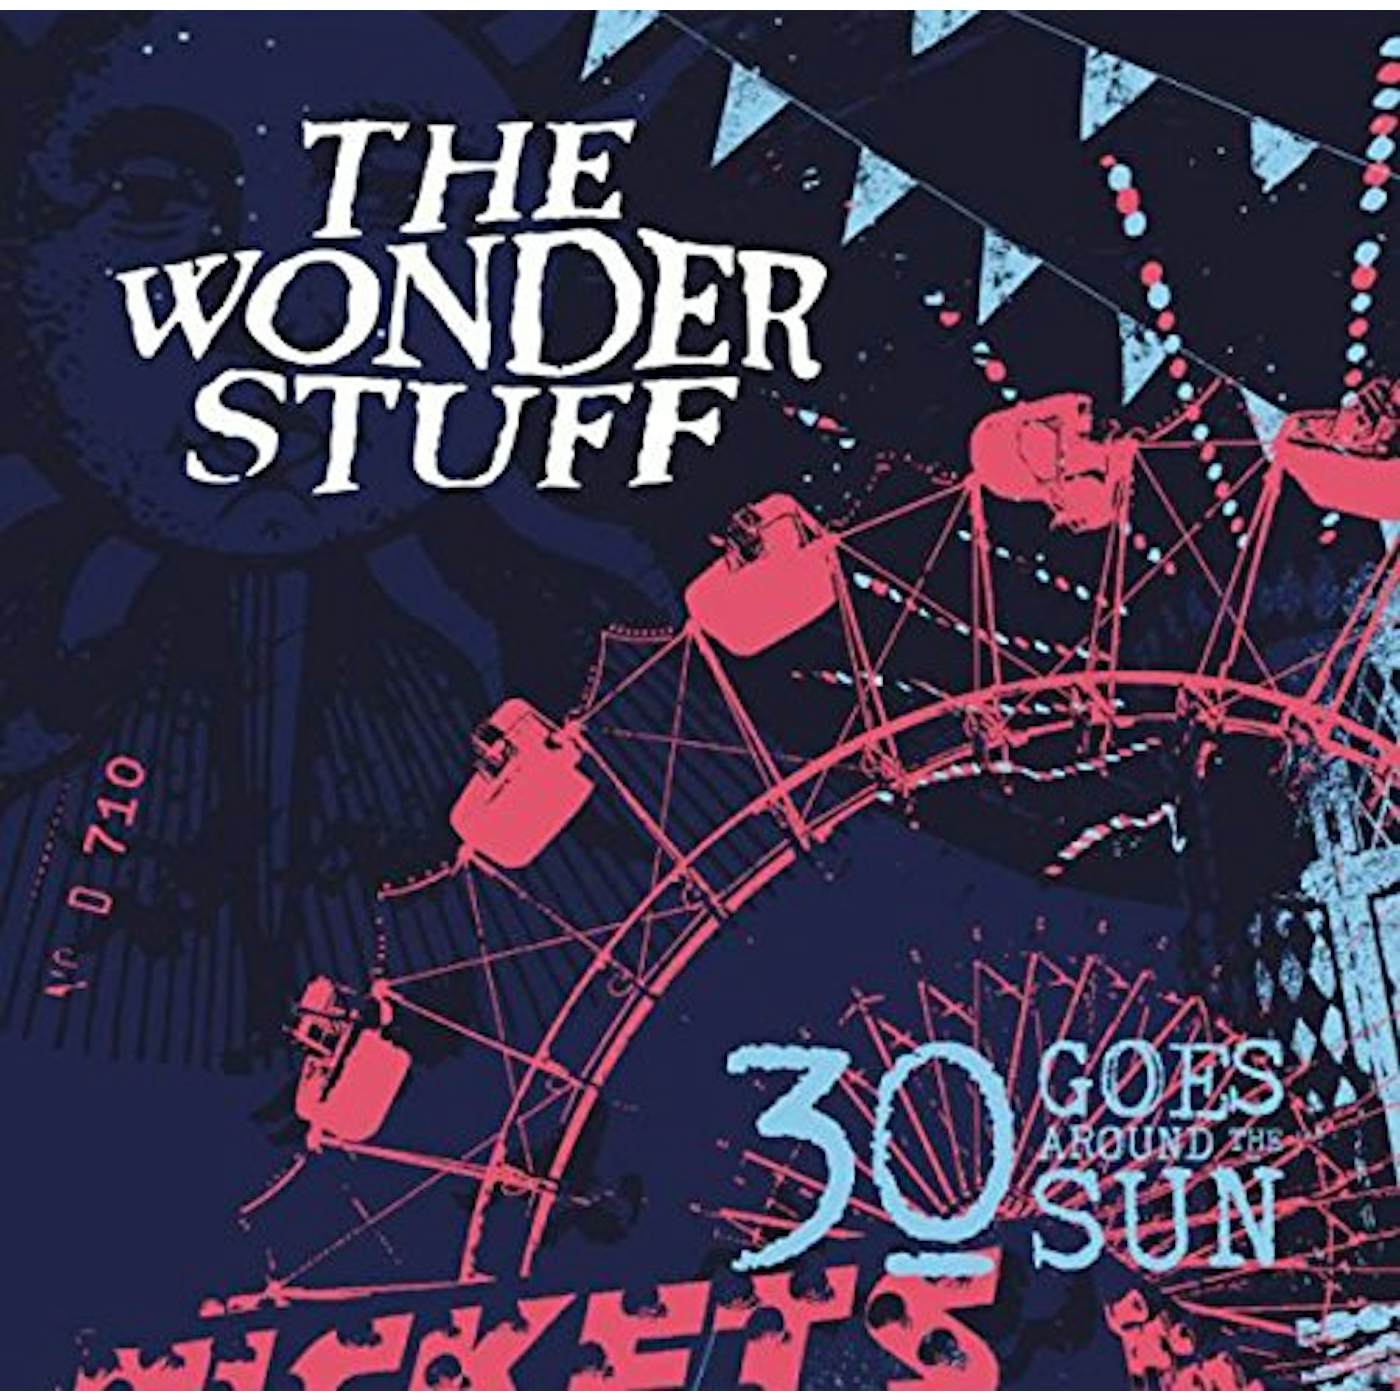 The Wonder Stuff 30 Goes Around the Sun Vinyl Record